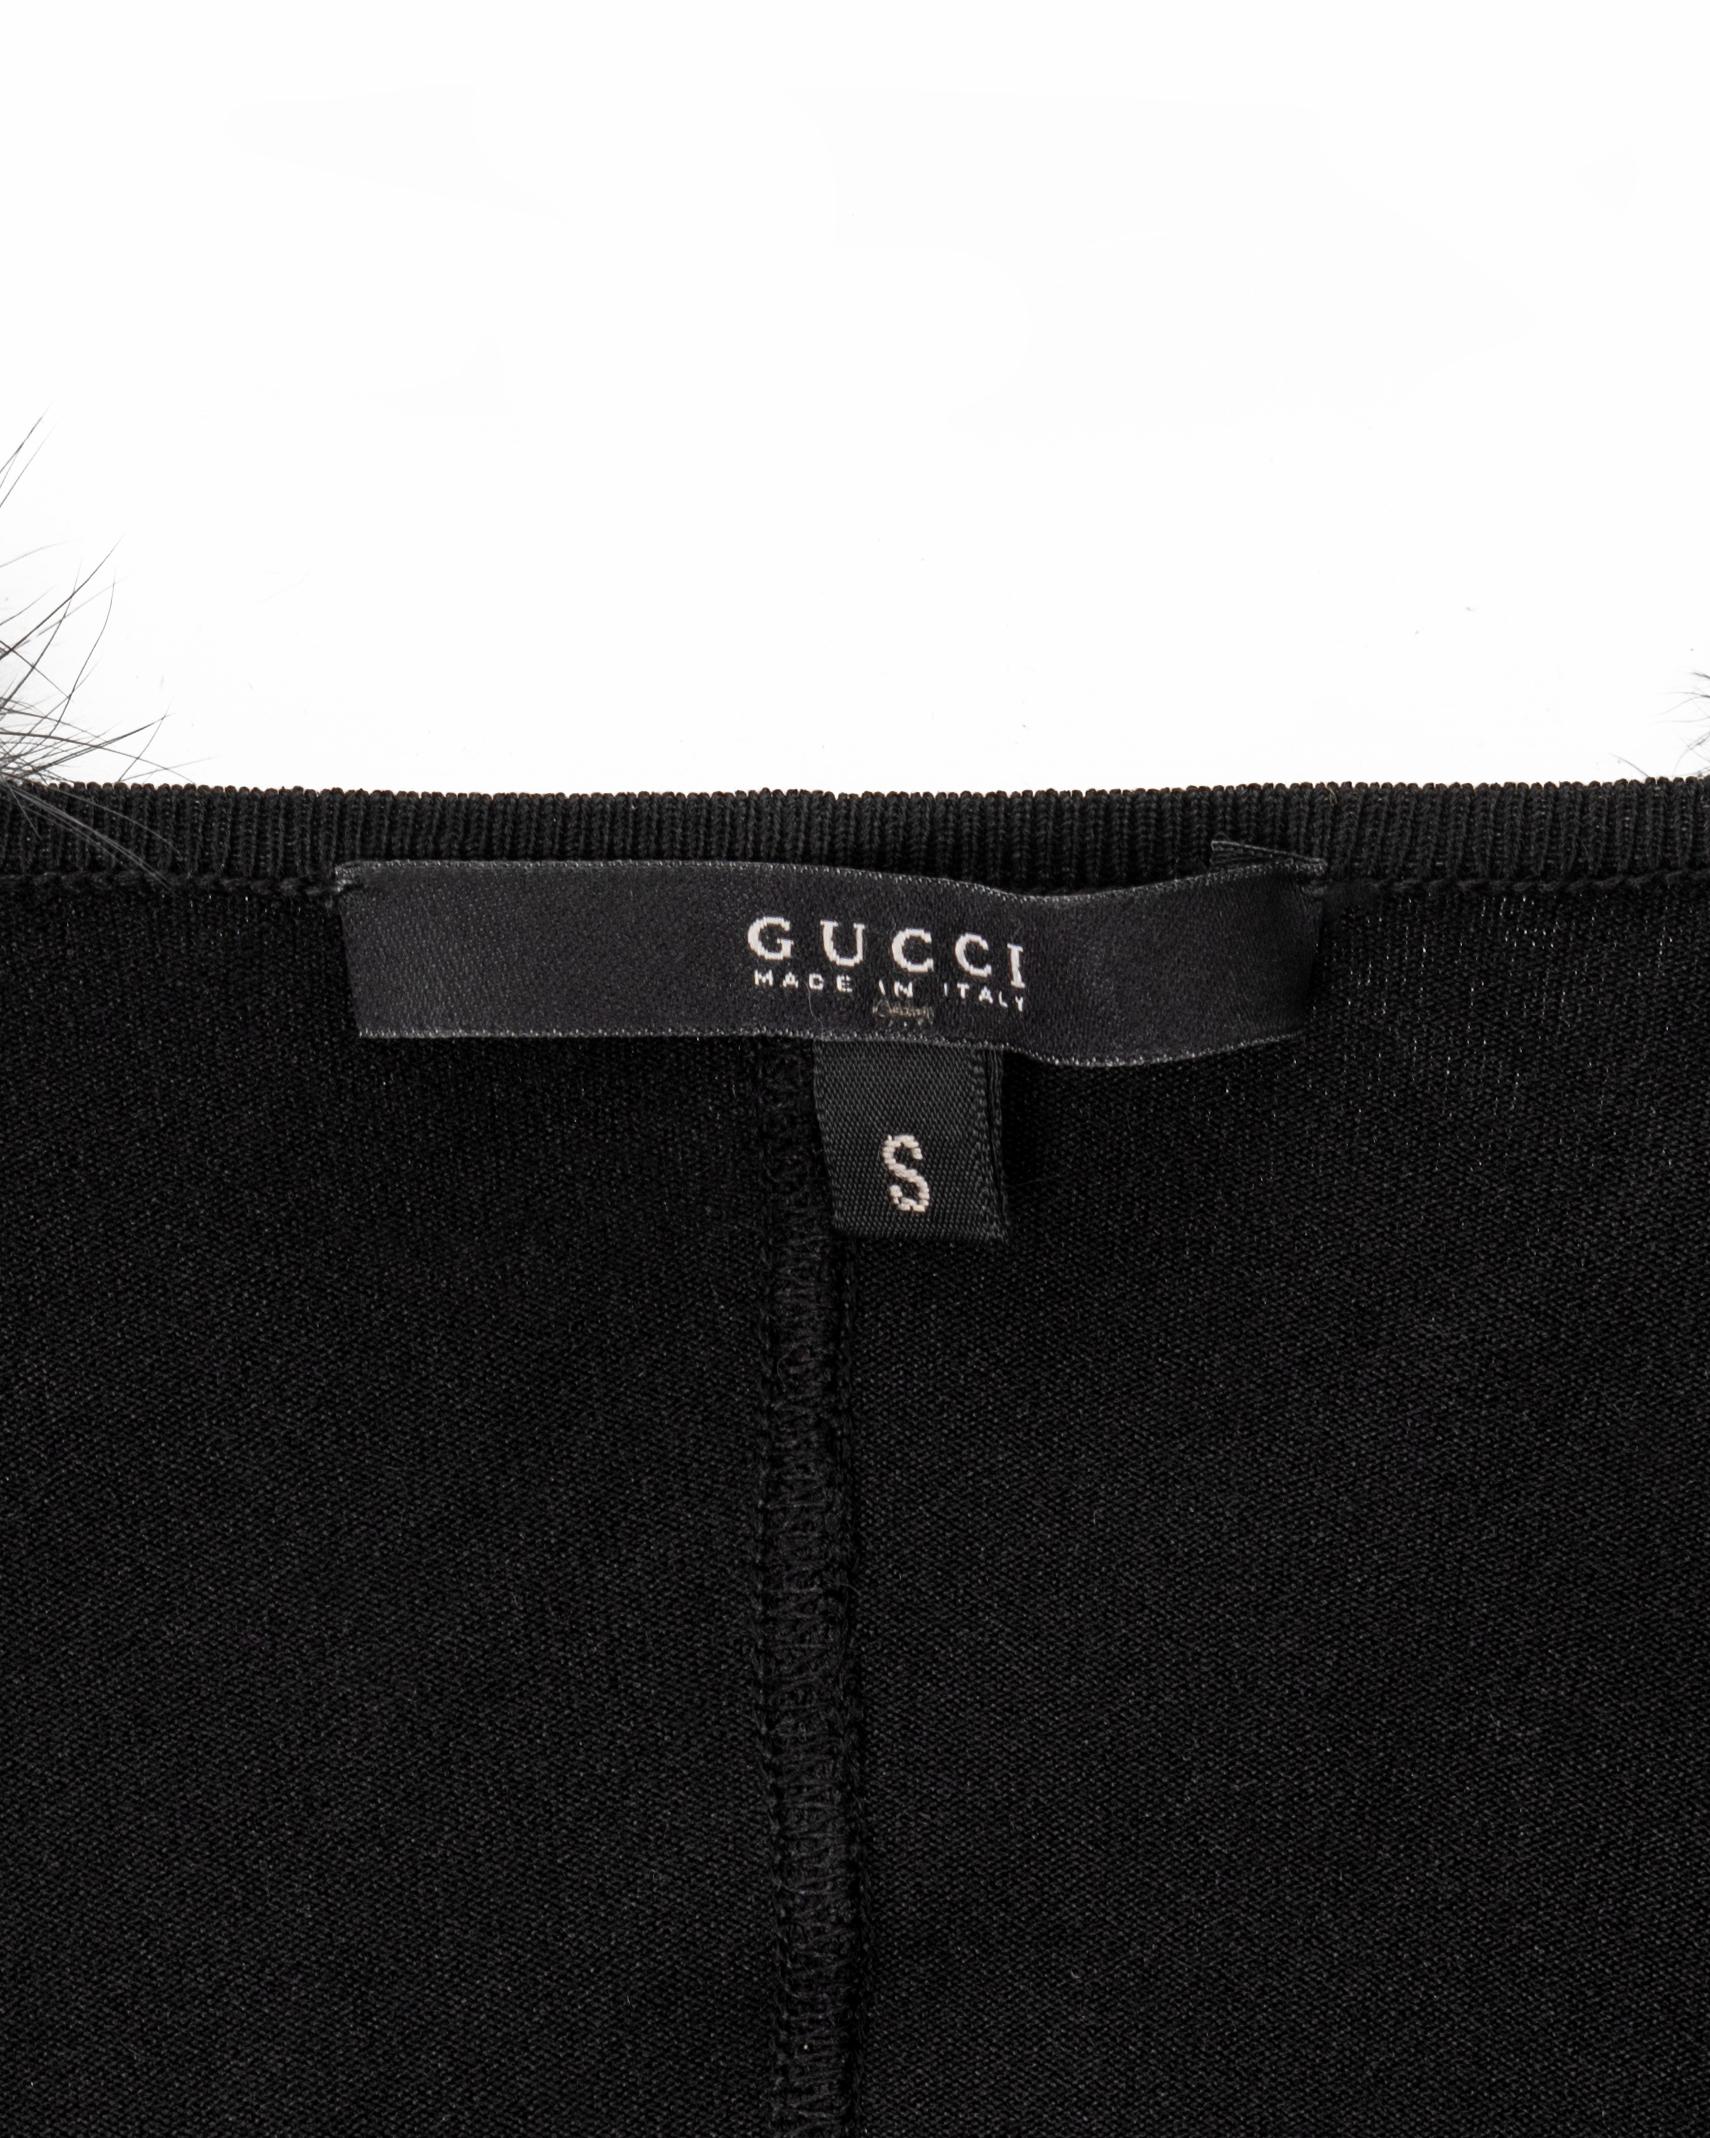 Gucci by Tom Ford black fox fur and silk jersey shrug, fw 2003 2